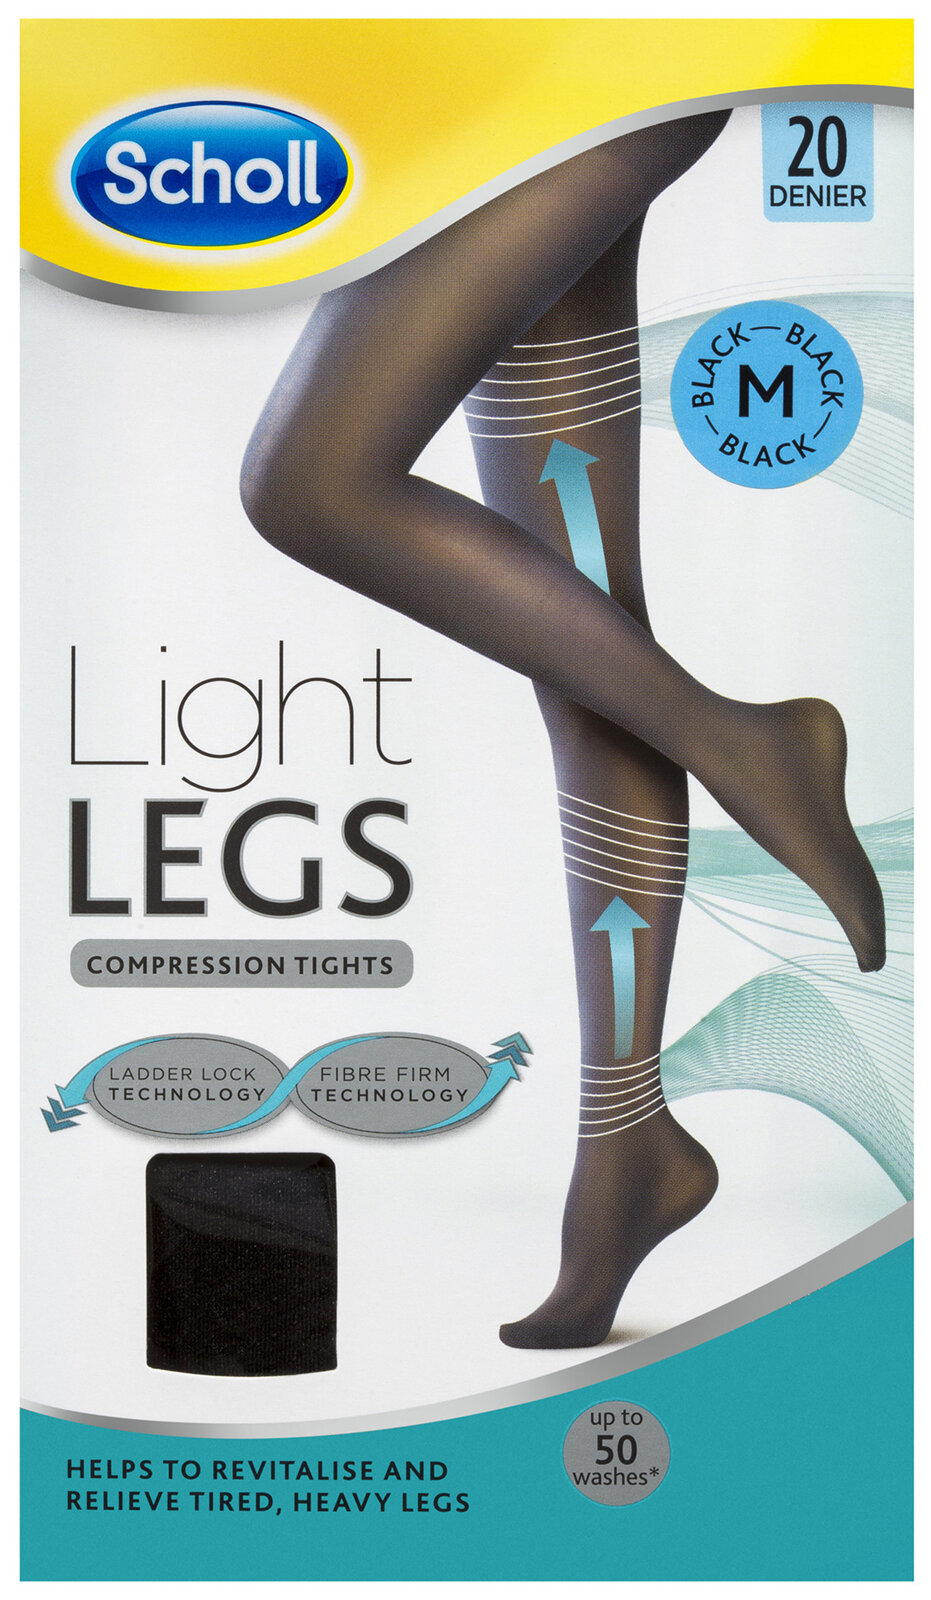 Scholl Light Legs Compression Tights 20 Denier for Tired Legs Black Medium  - Unichem 218 Ponsonby Pharmacy Shop